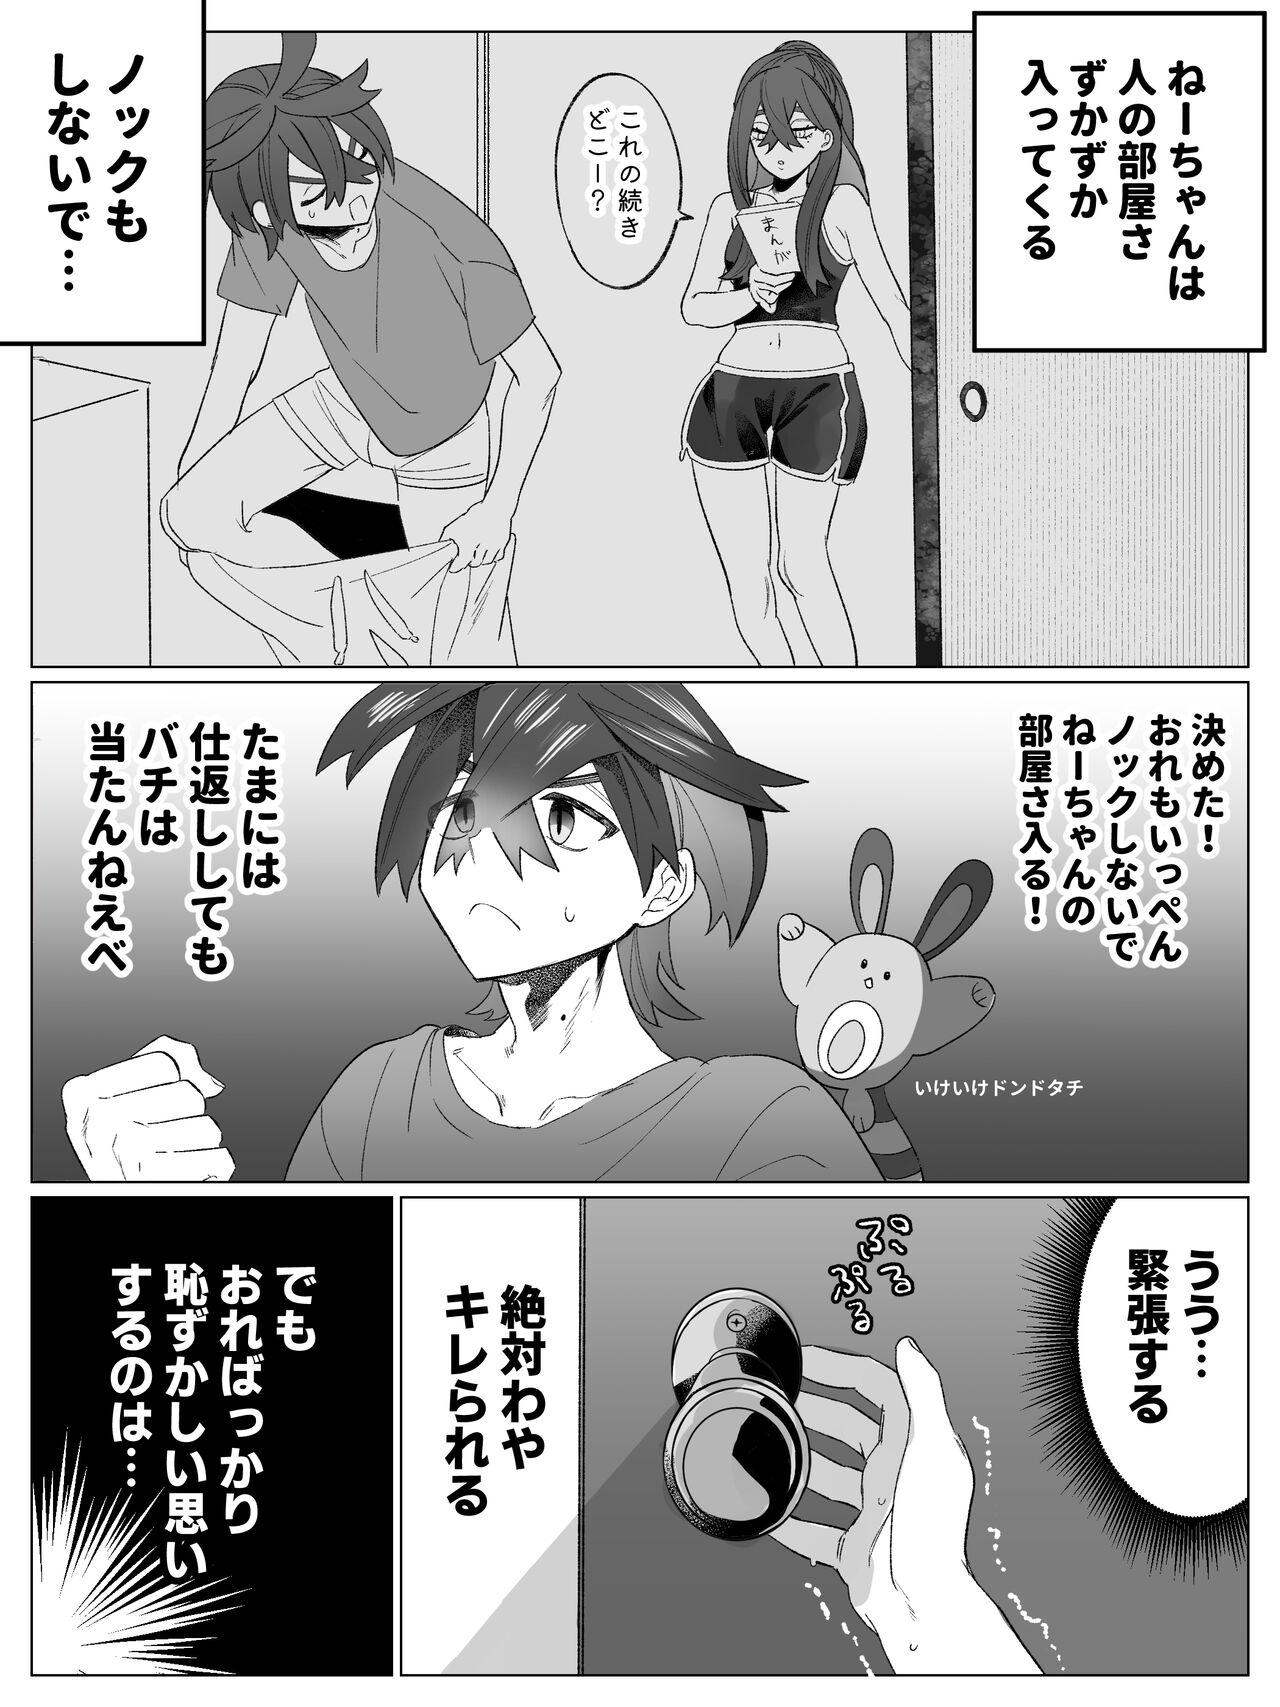 Amigos Miuchi no Onanie Miru no wa Kitsui - Pokemon | pocket monsters Snatch - Picture 2